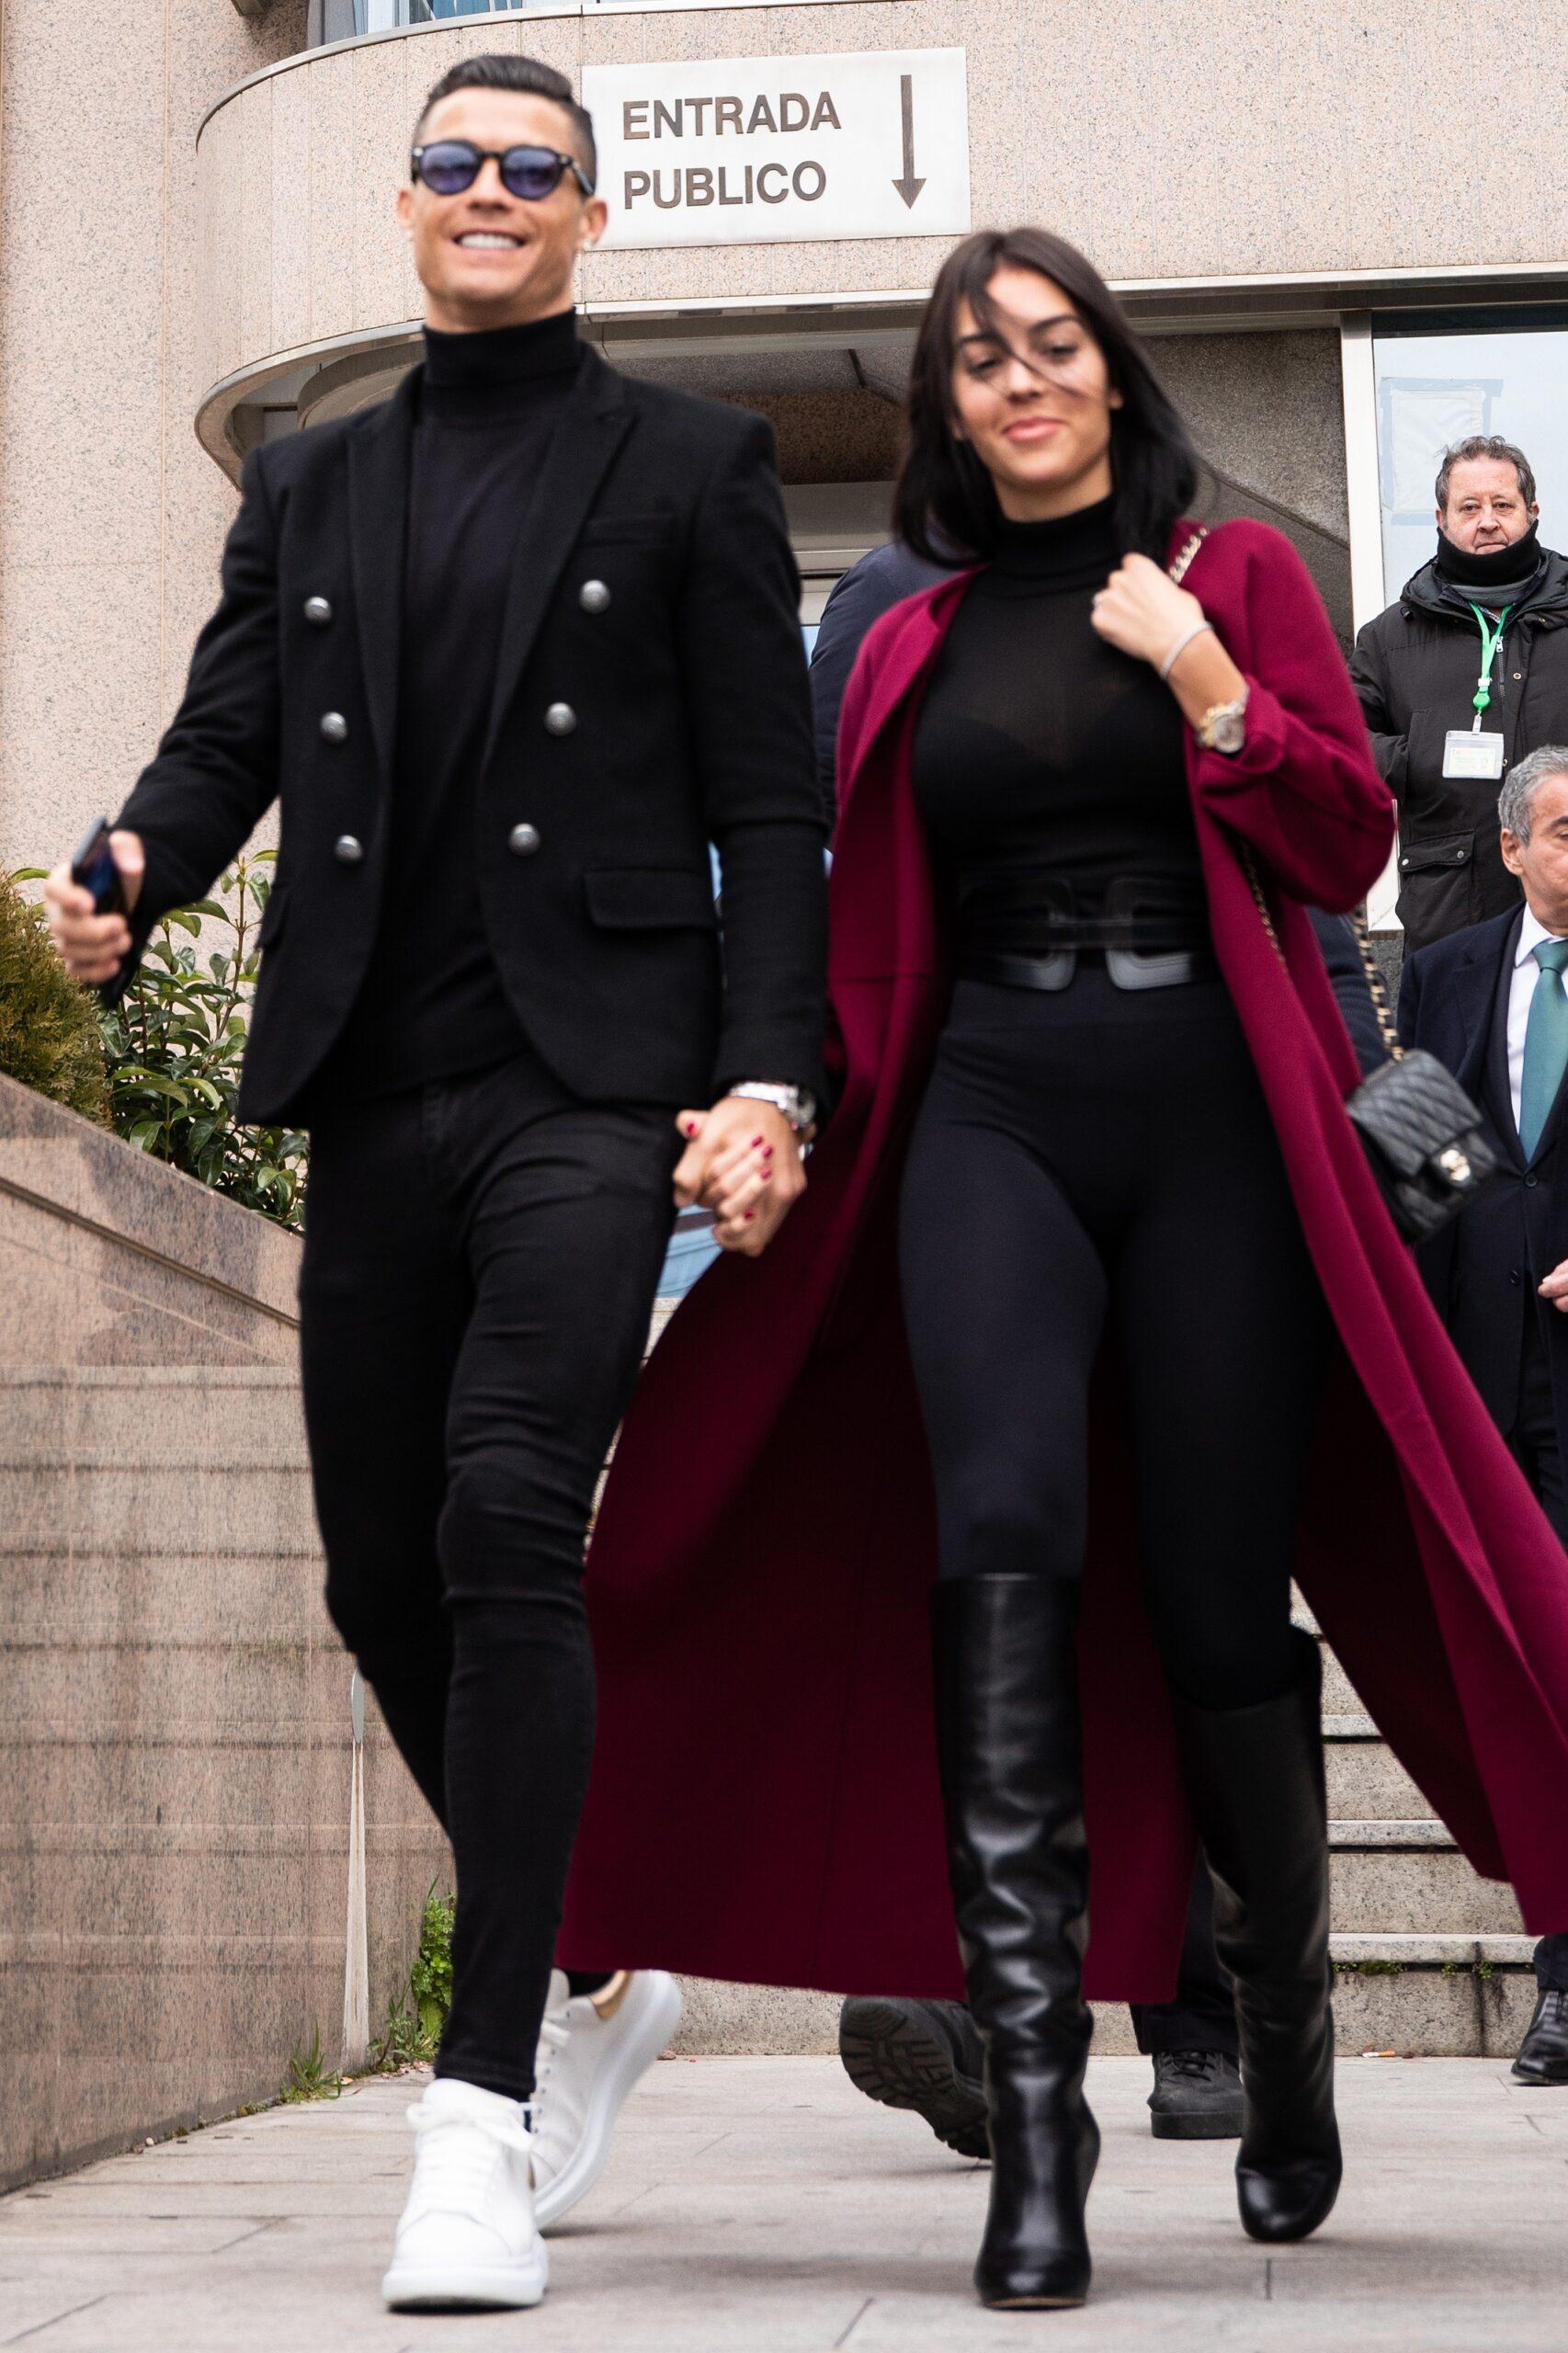 Cristiano Ronaldo and Georgina Rodríguez walking